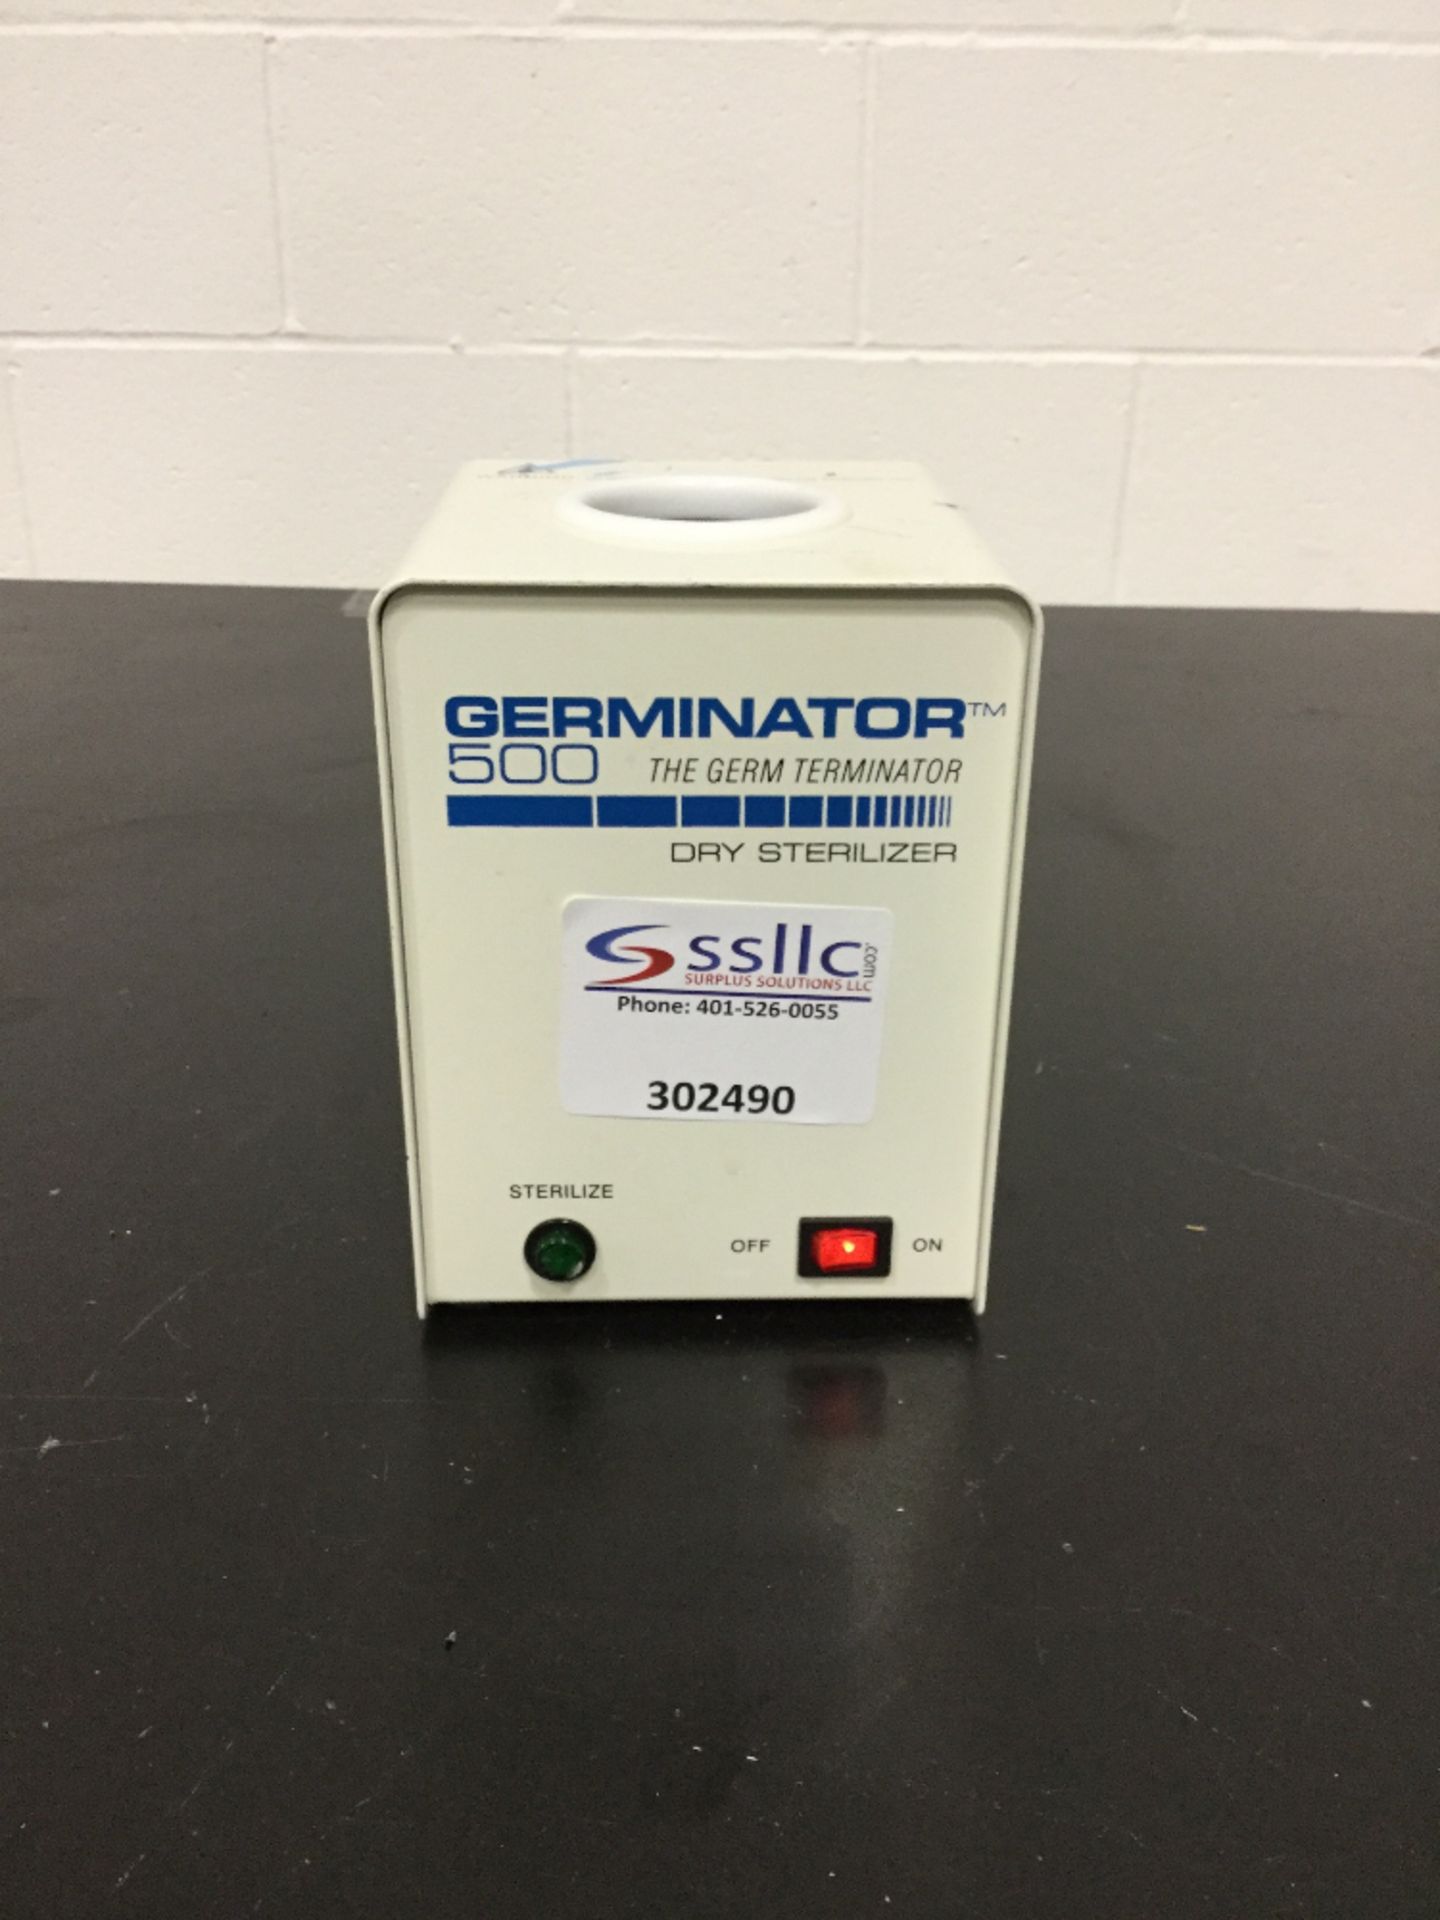 Germinator 500 Dry Sterilizer